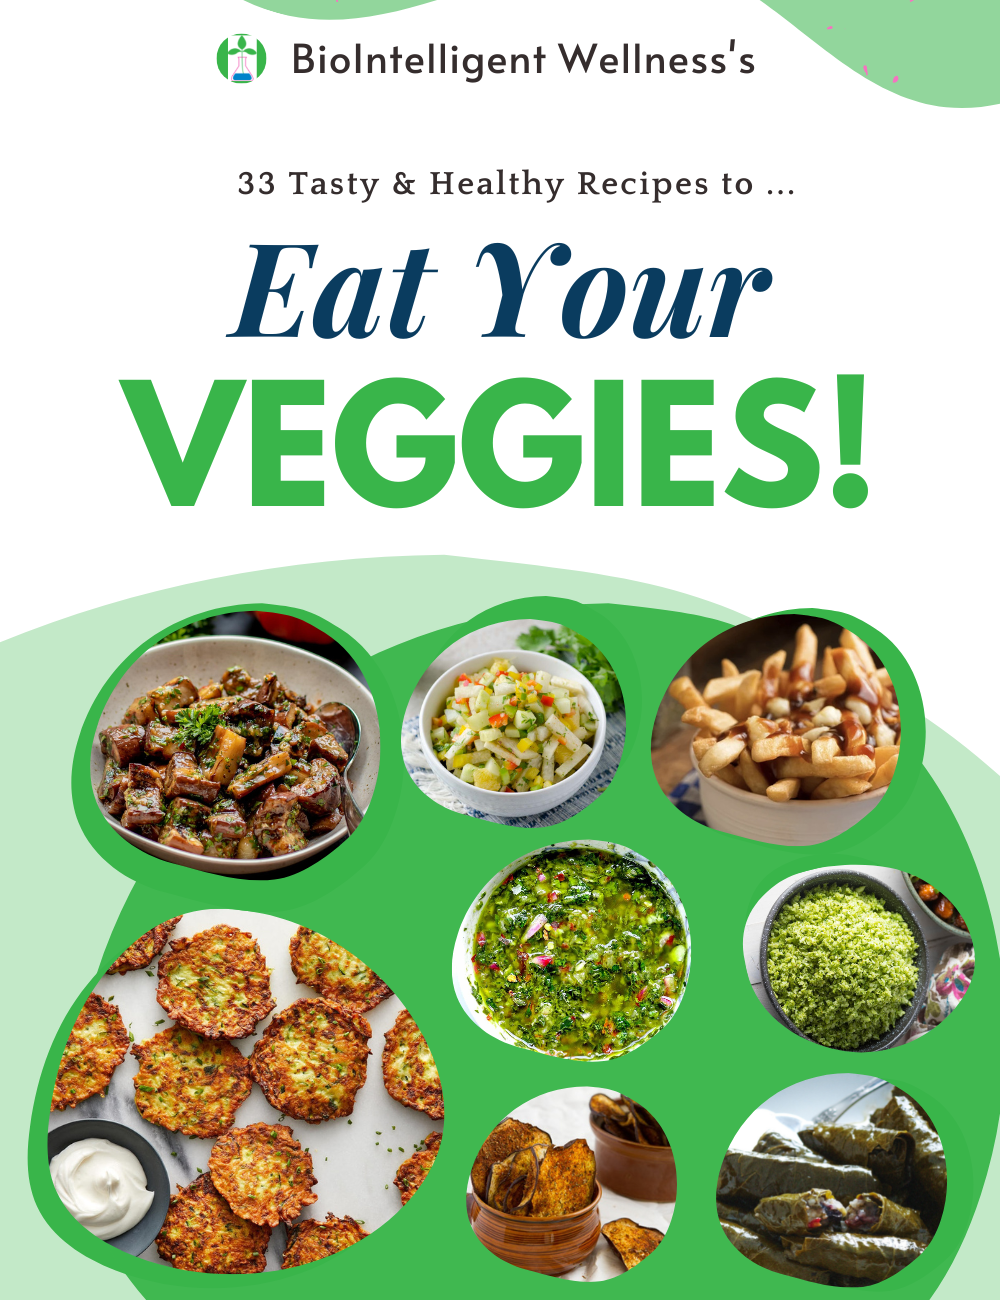 Ideal Protein Veggies Cookbook